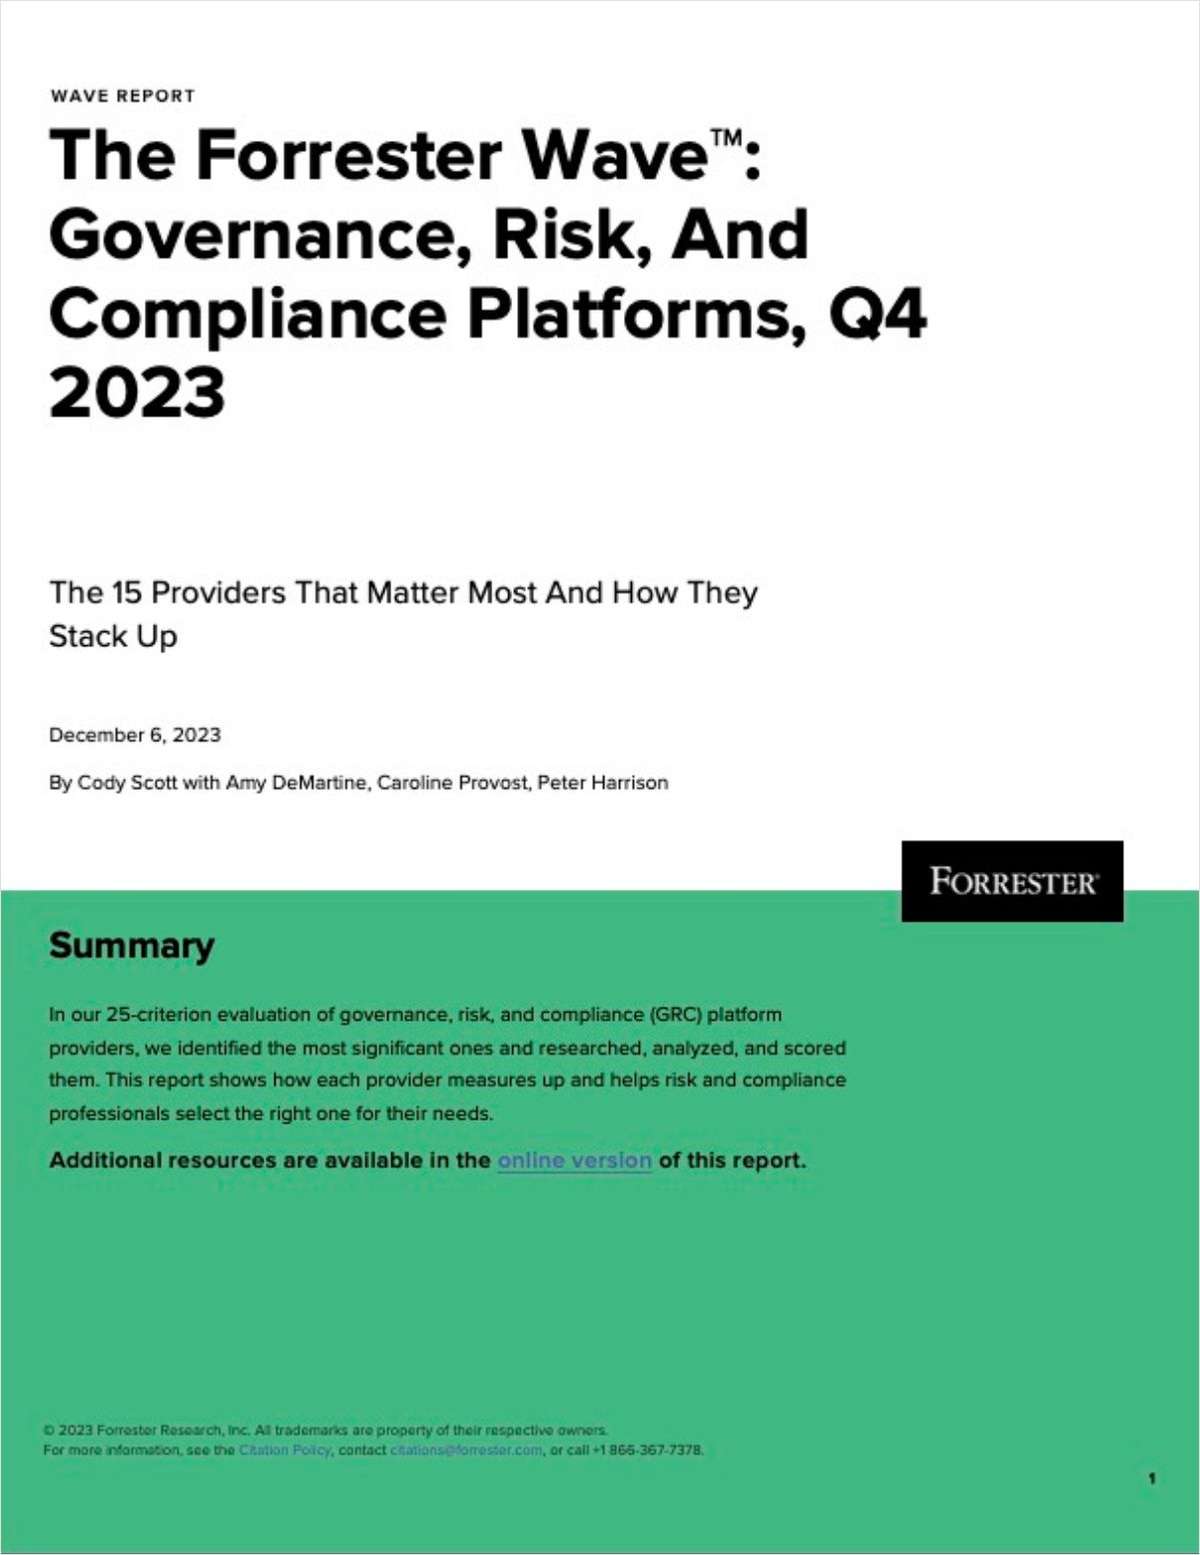 The Forrester Wave™: Governance, Risk, And Compliance Platforms, Q4 2023